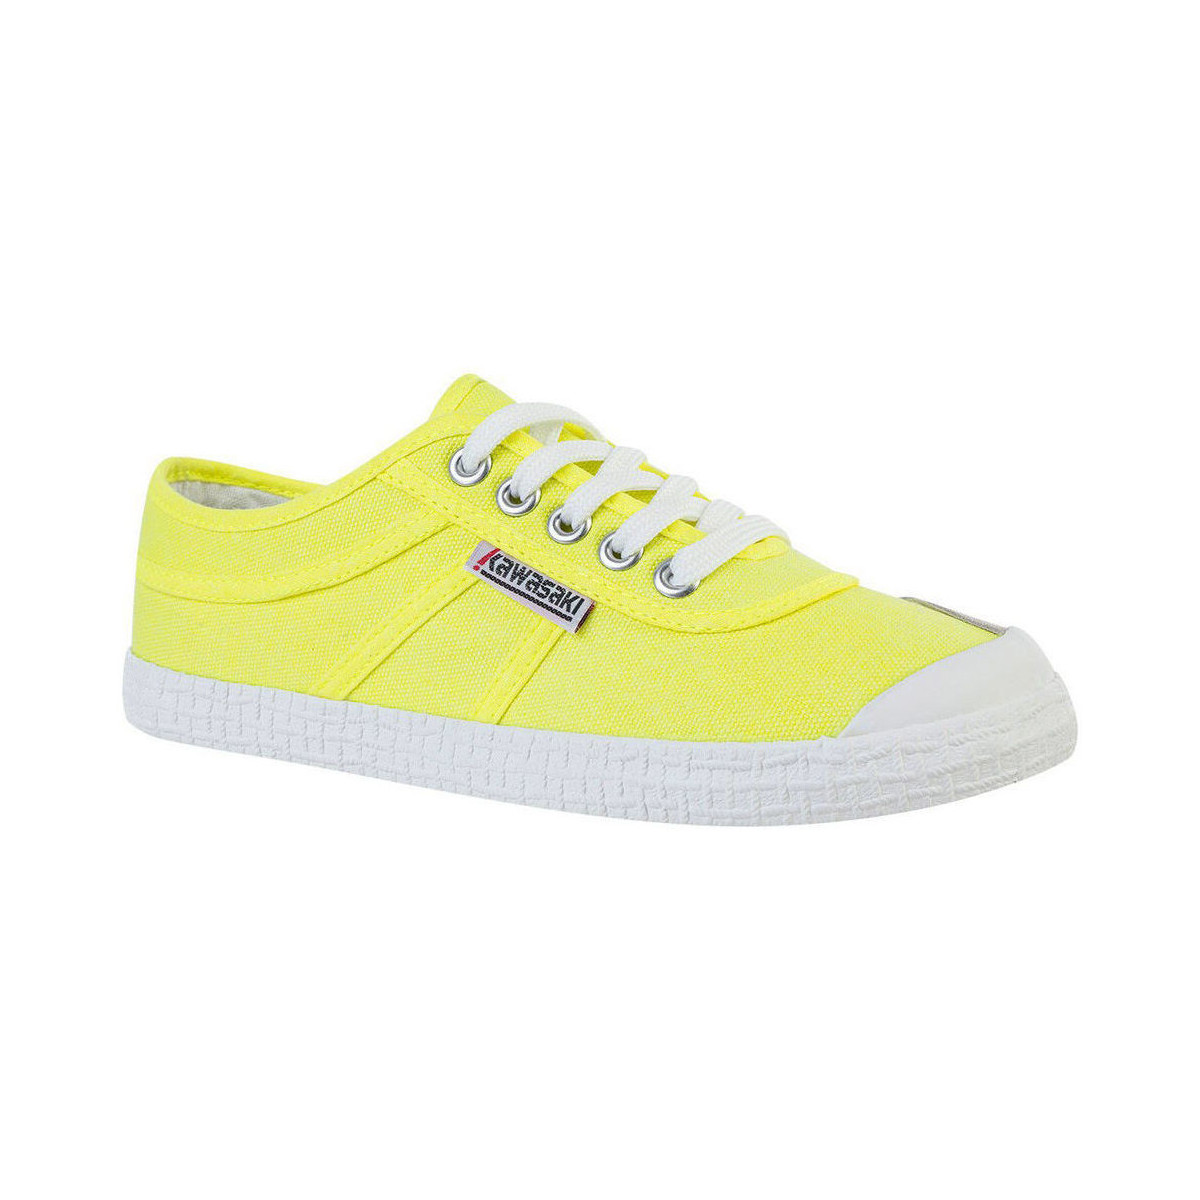 Sko Herre Sneakers Kawasaki Original Neon Canvas Shoe K202428 5001 Safety Yellow Gul